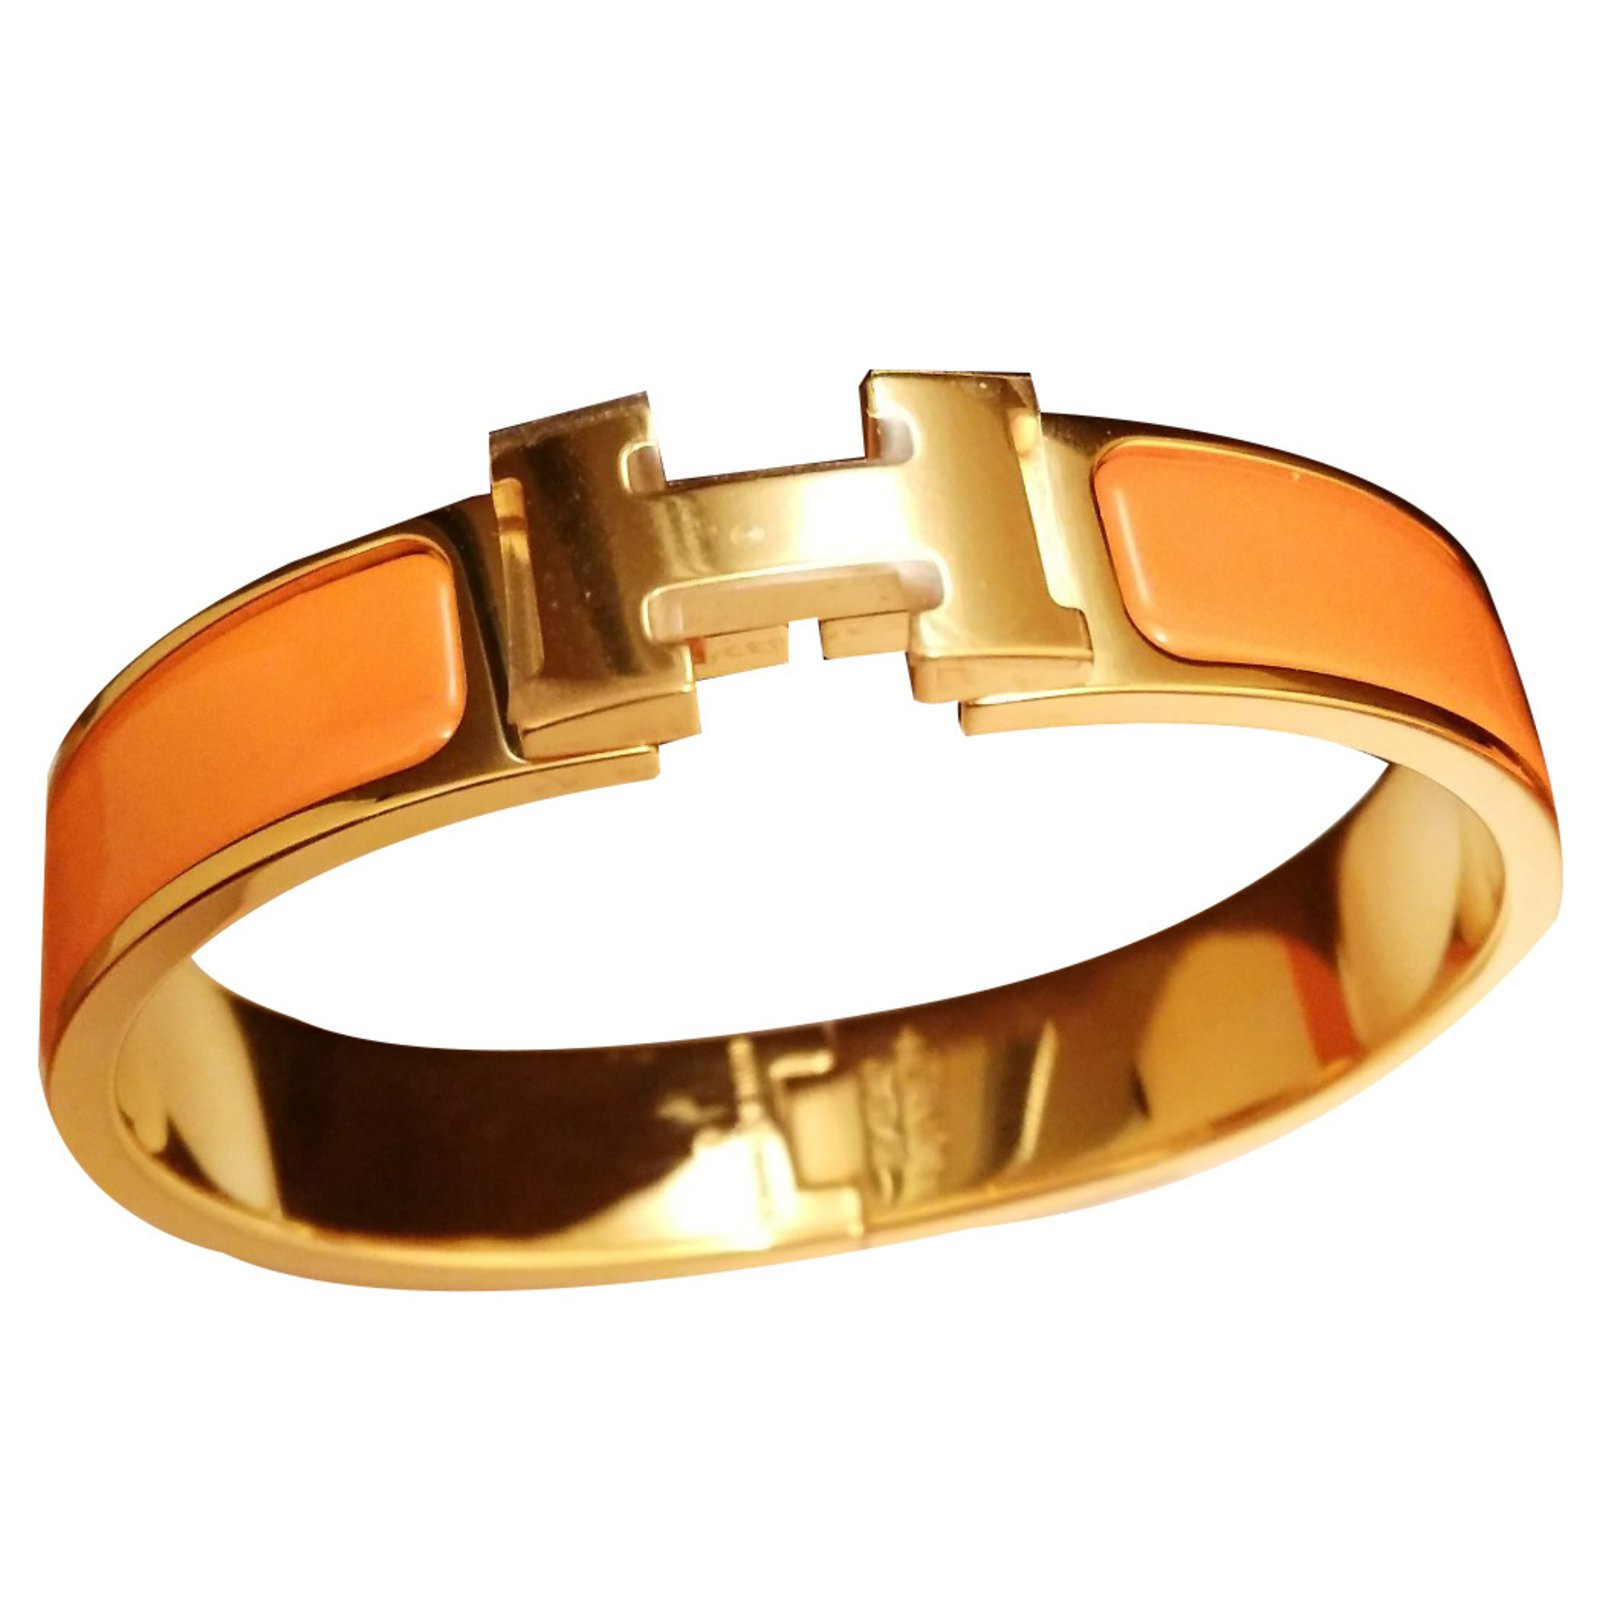 Hermes Bracelet Womens
 Hermès Bracelets Bracelets Ceramic Orange ref Joli